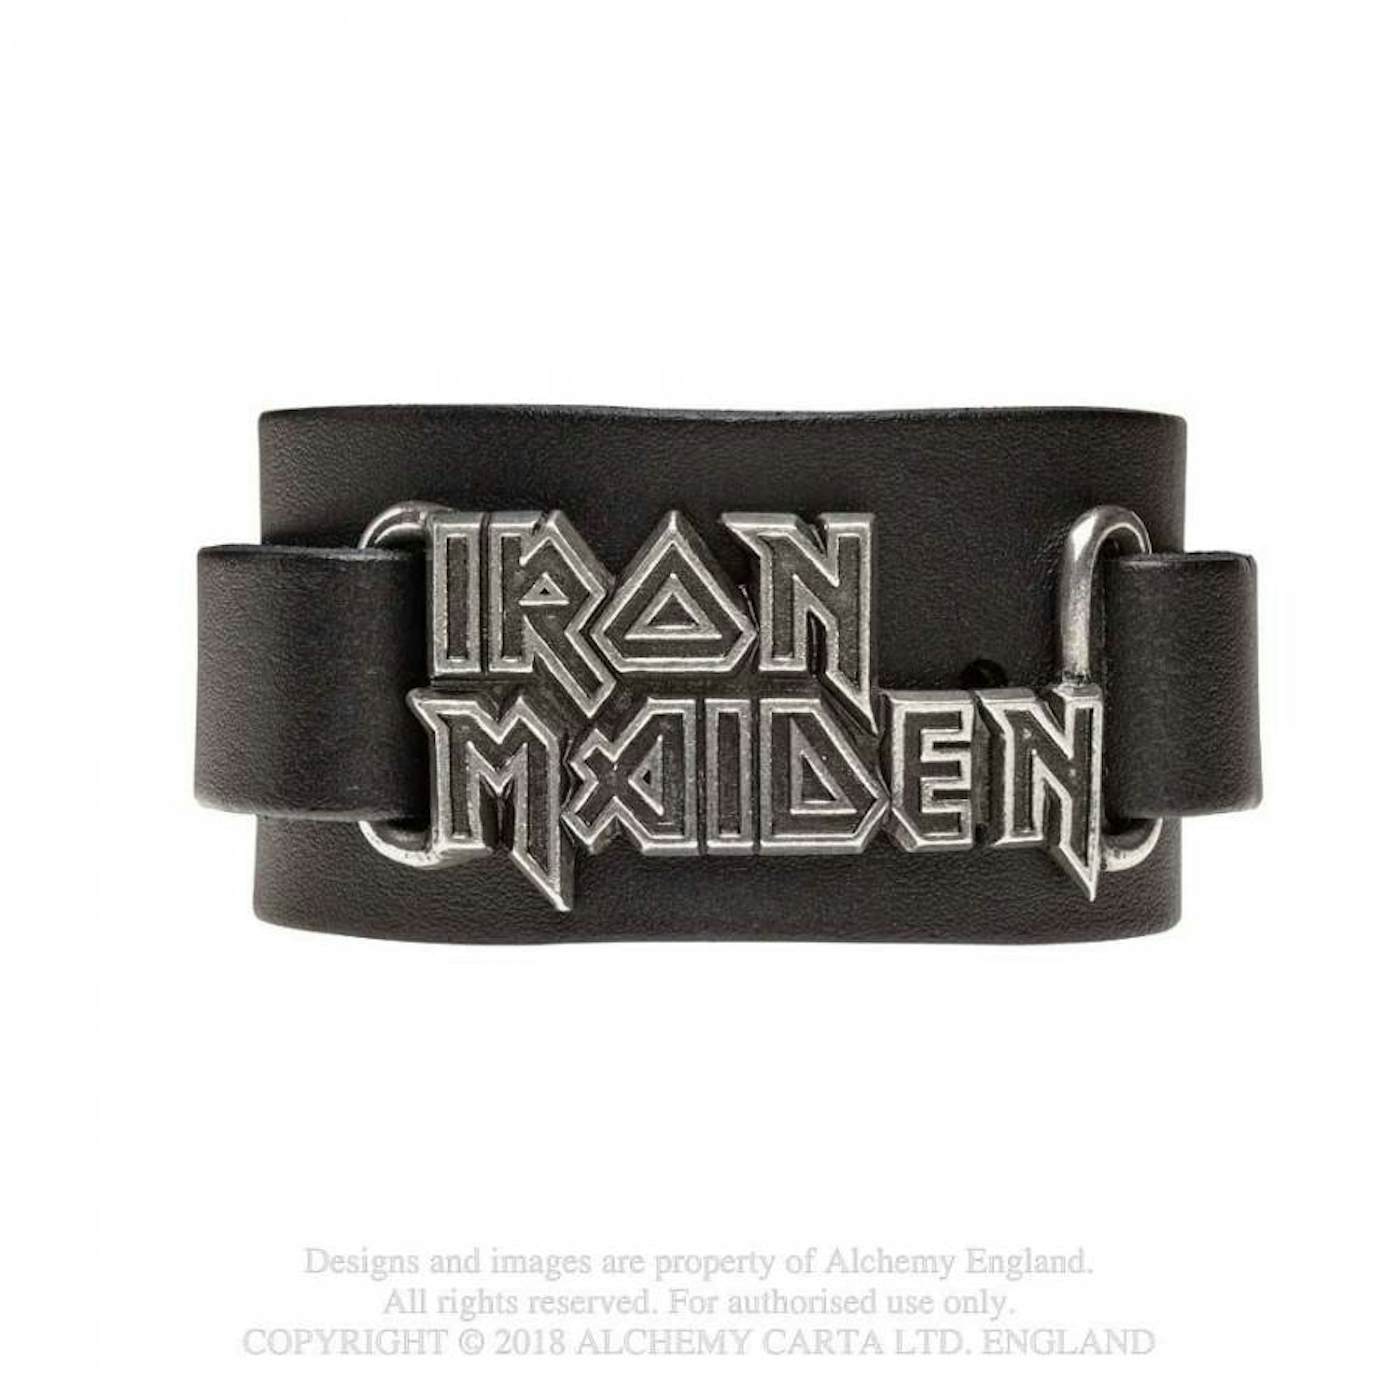  Iron Maiden Wrist Strap - Logo